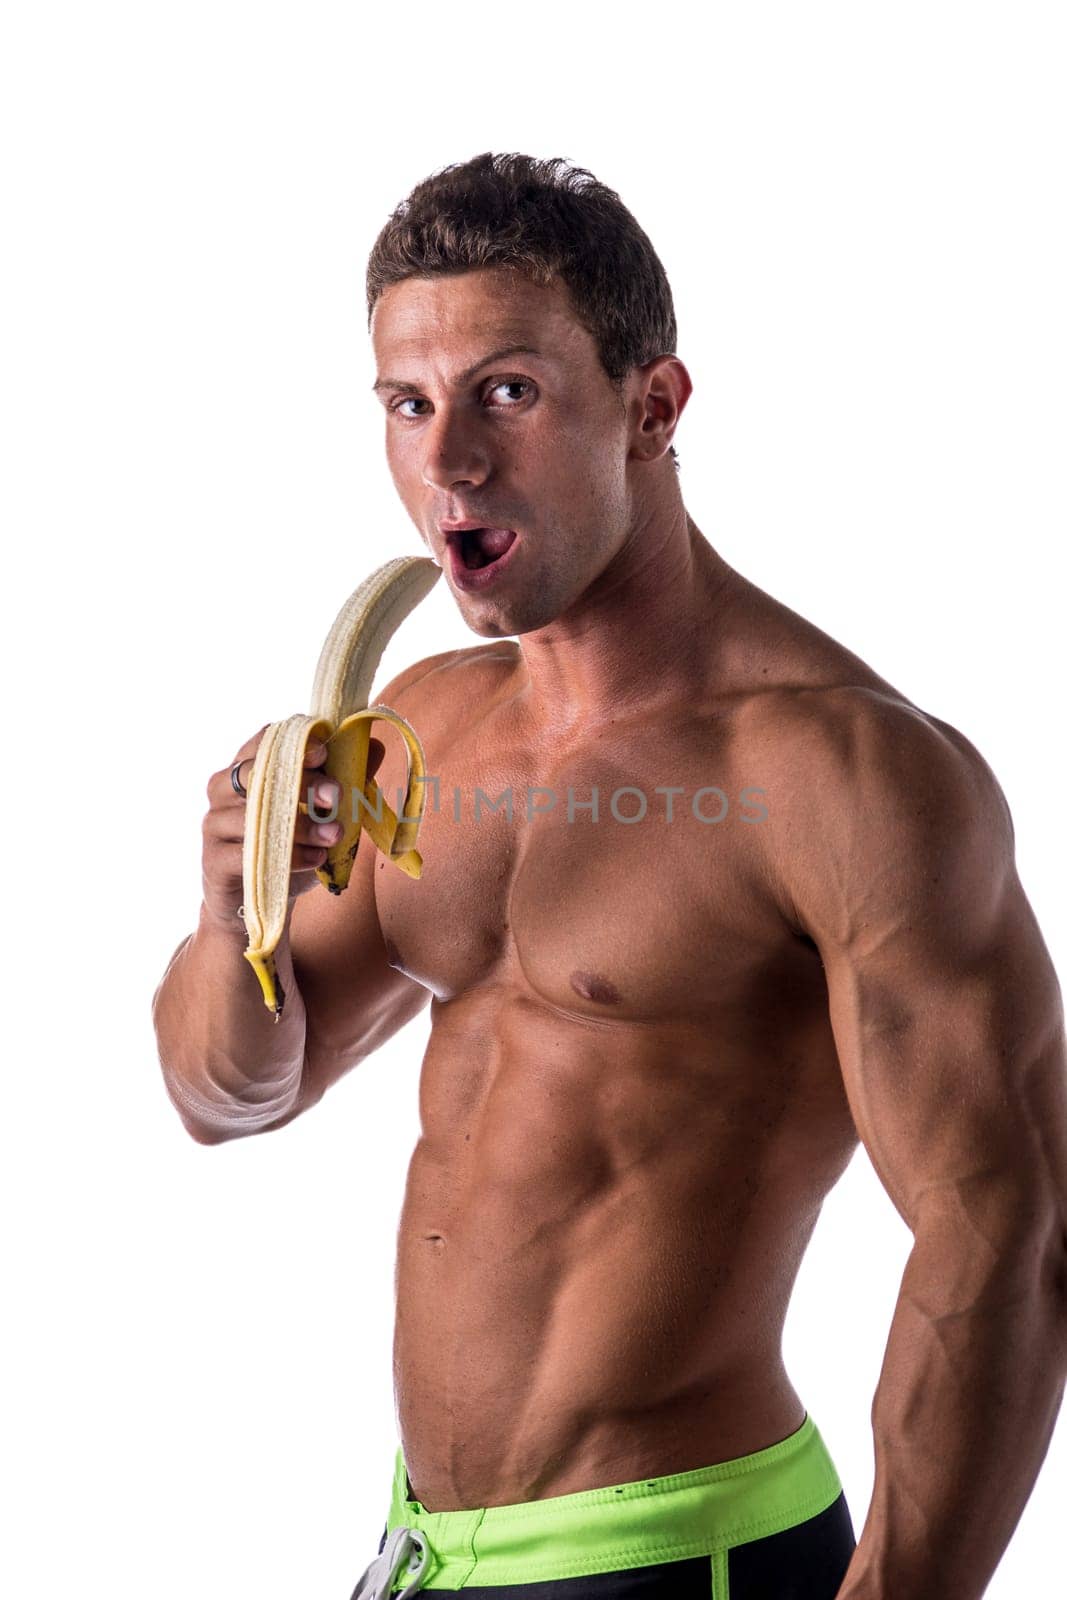 Handsome muscular shirtless man eating banana by artofphoto